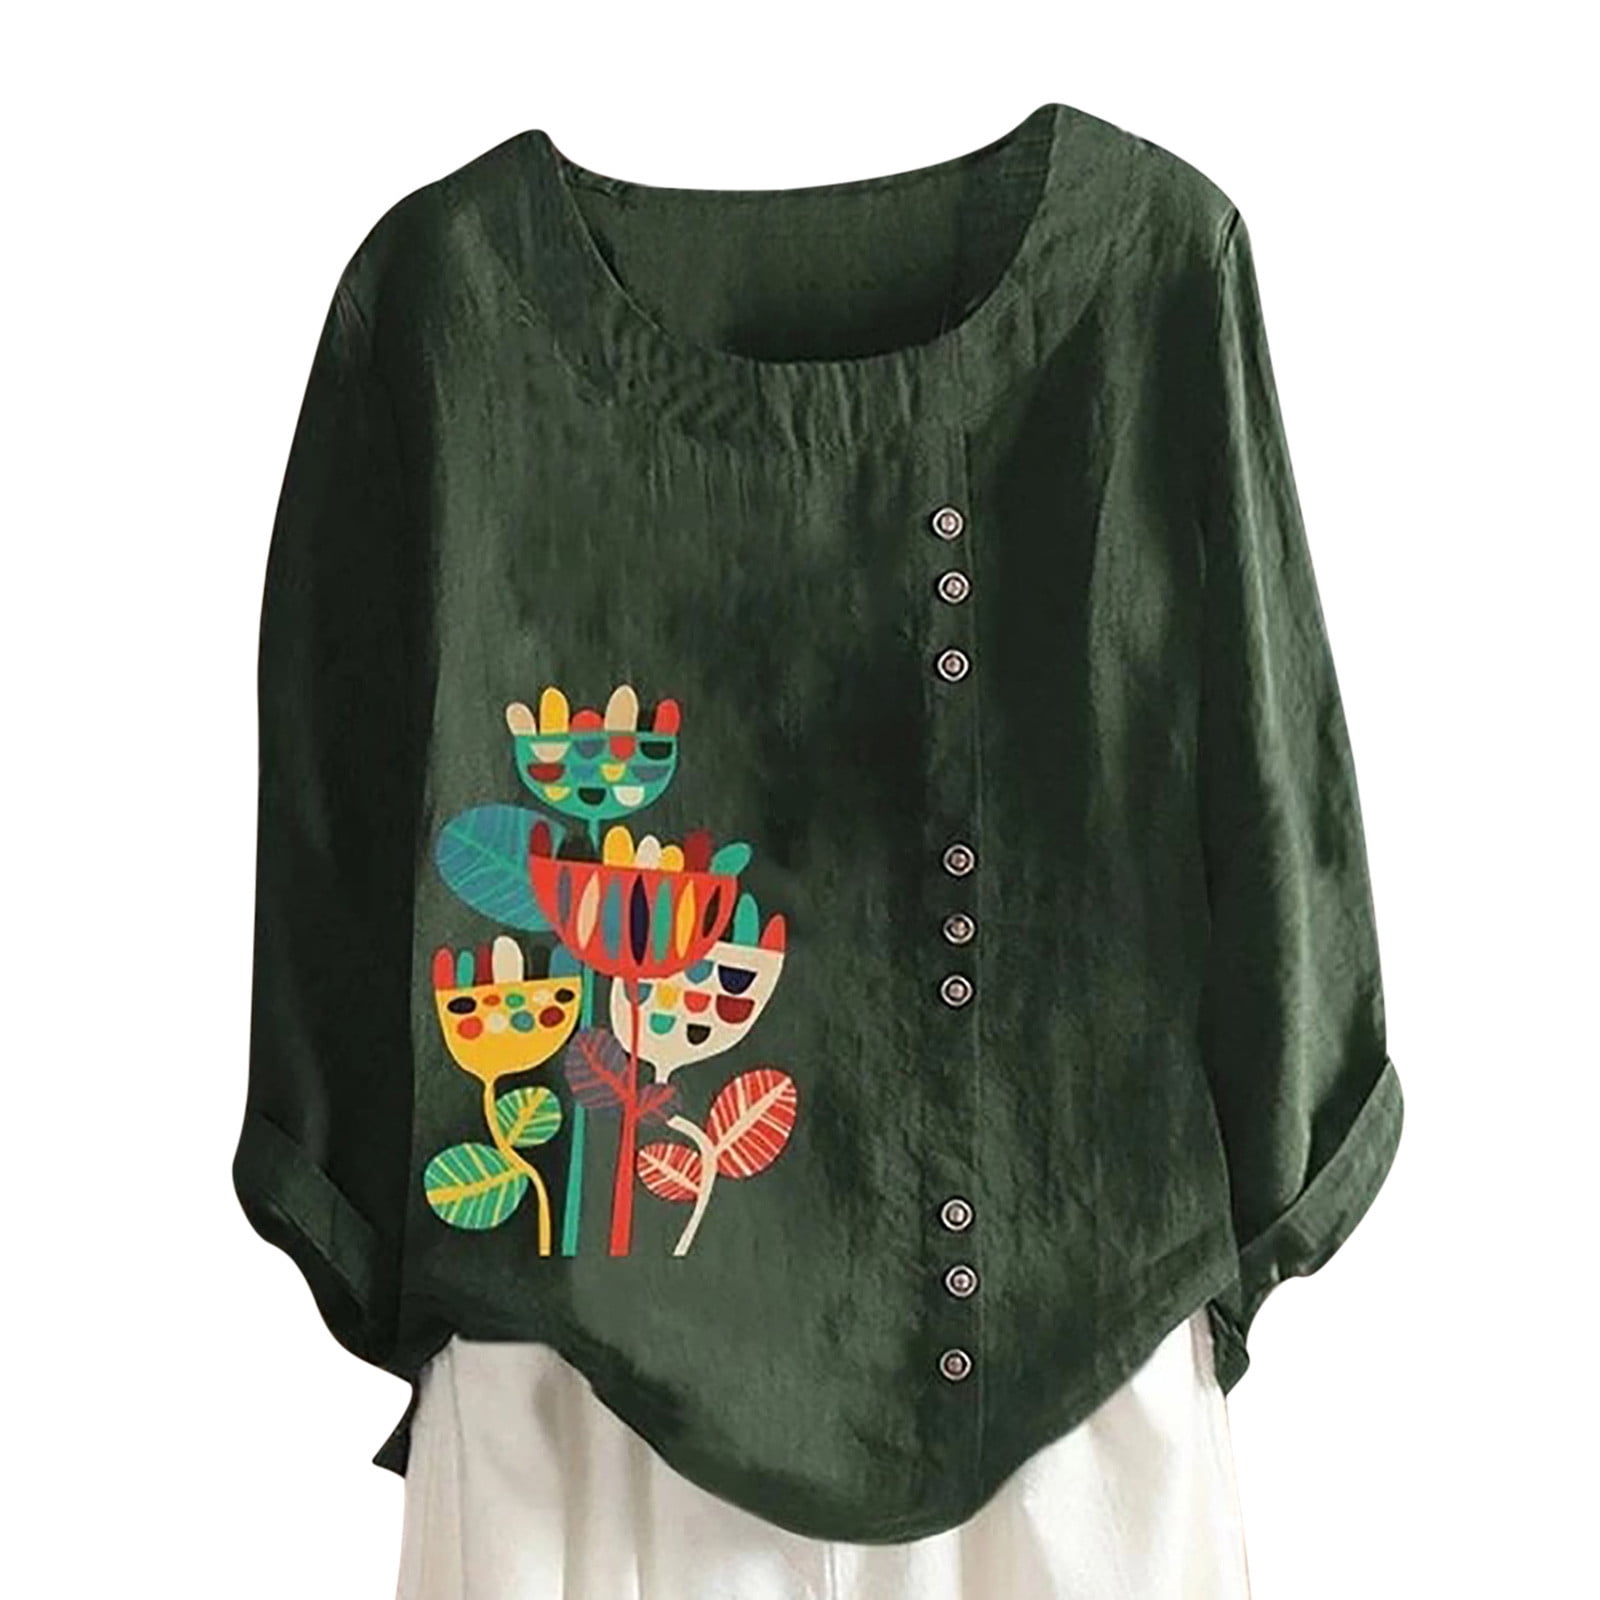 Dqueduo Plus Size Women Tops Summer Casual Button Floral Print Short ...